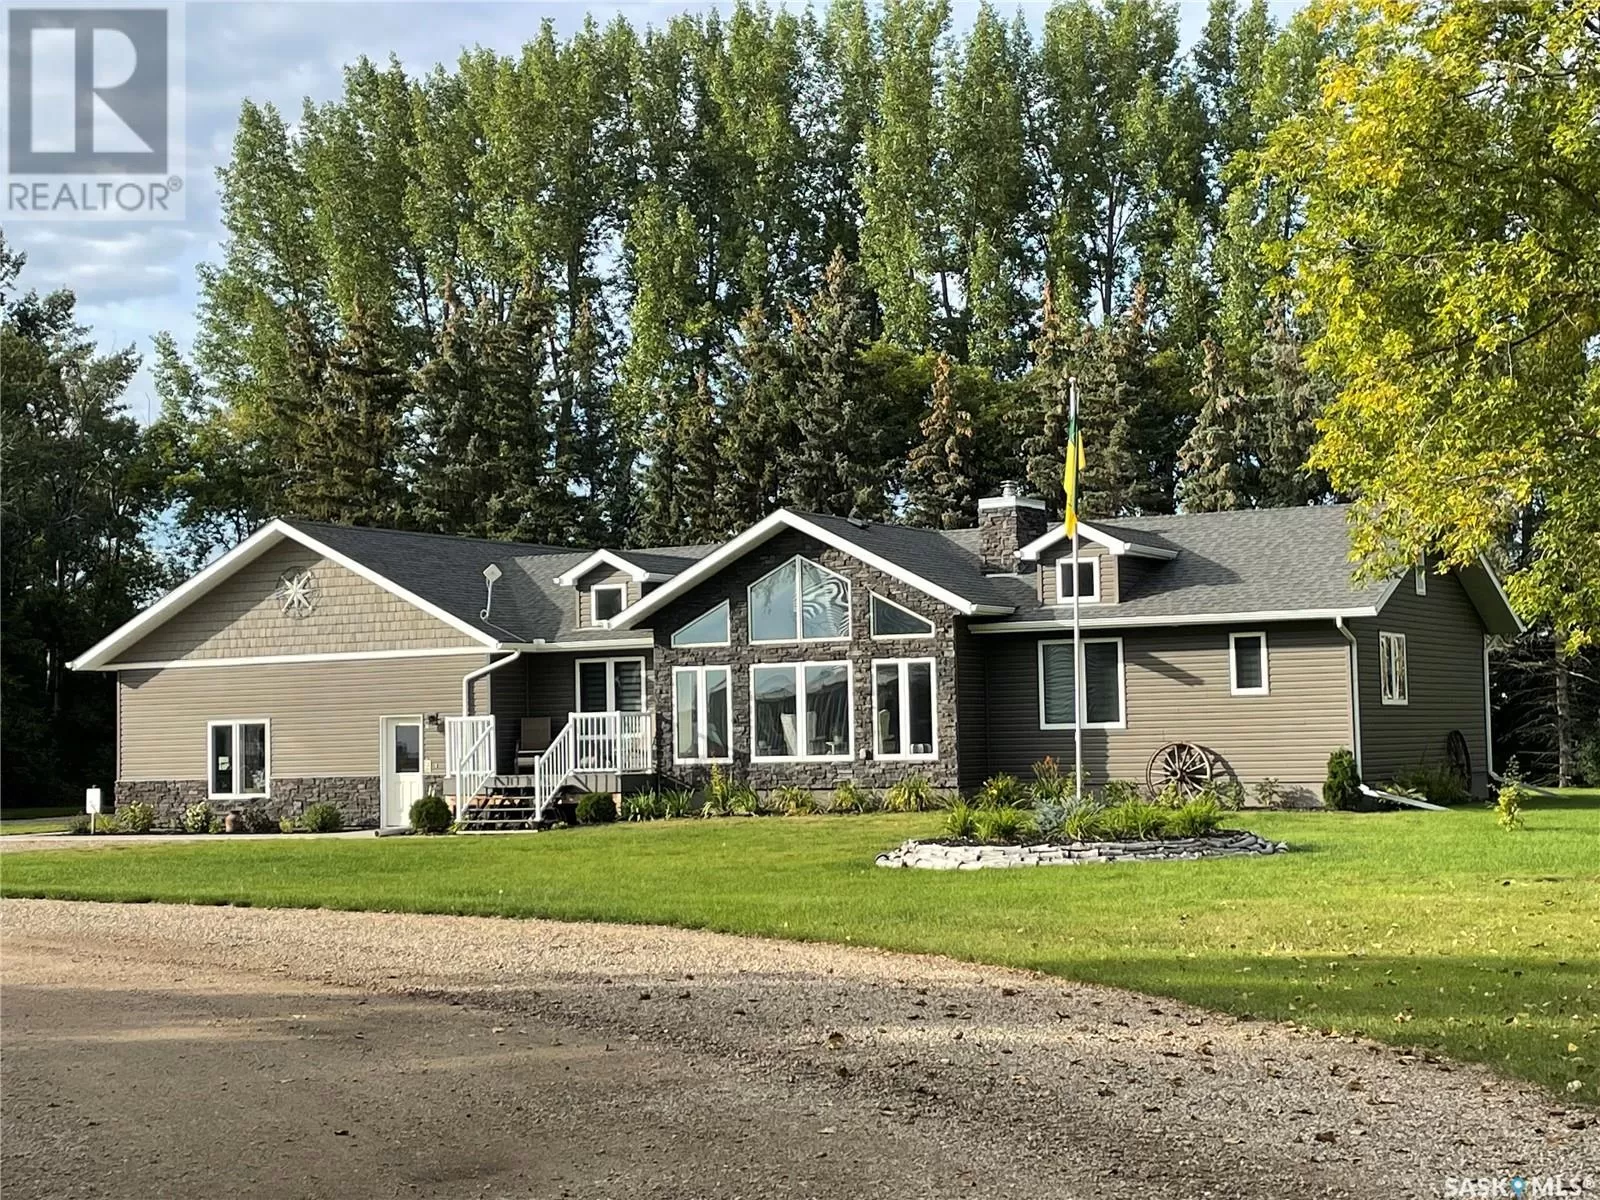 House for rent: Lavrysen Central Yard, Good Lake Rm No. 274, Saskatchewan S0A 0L0